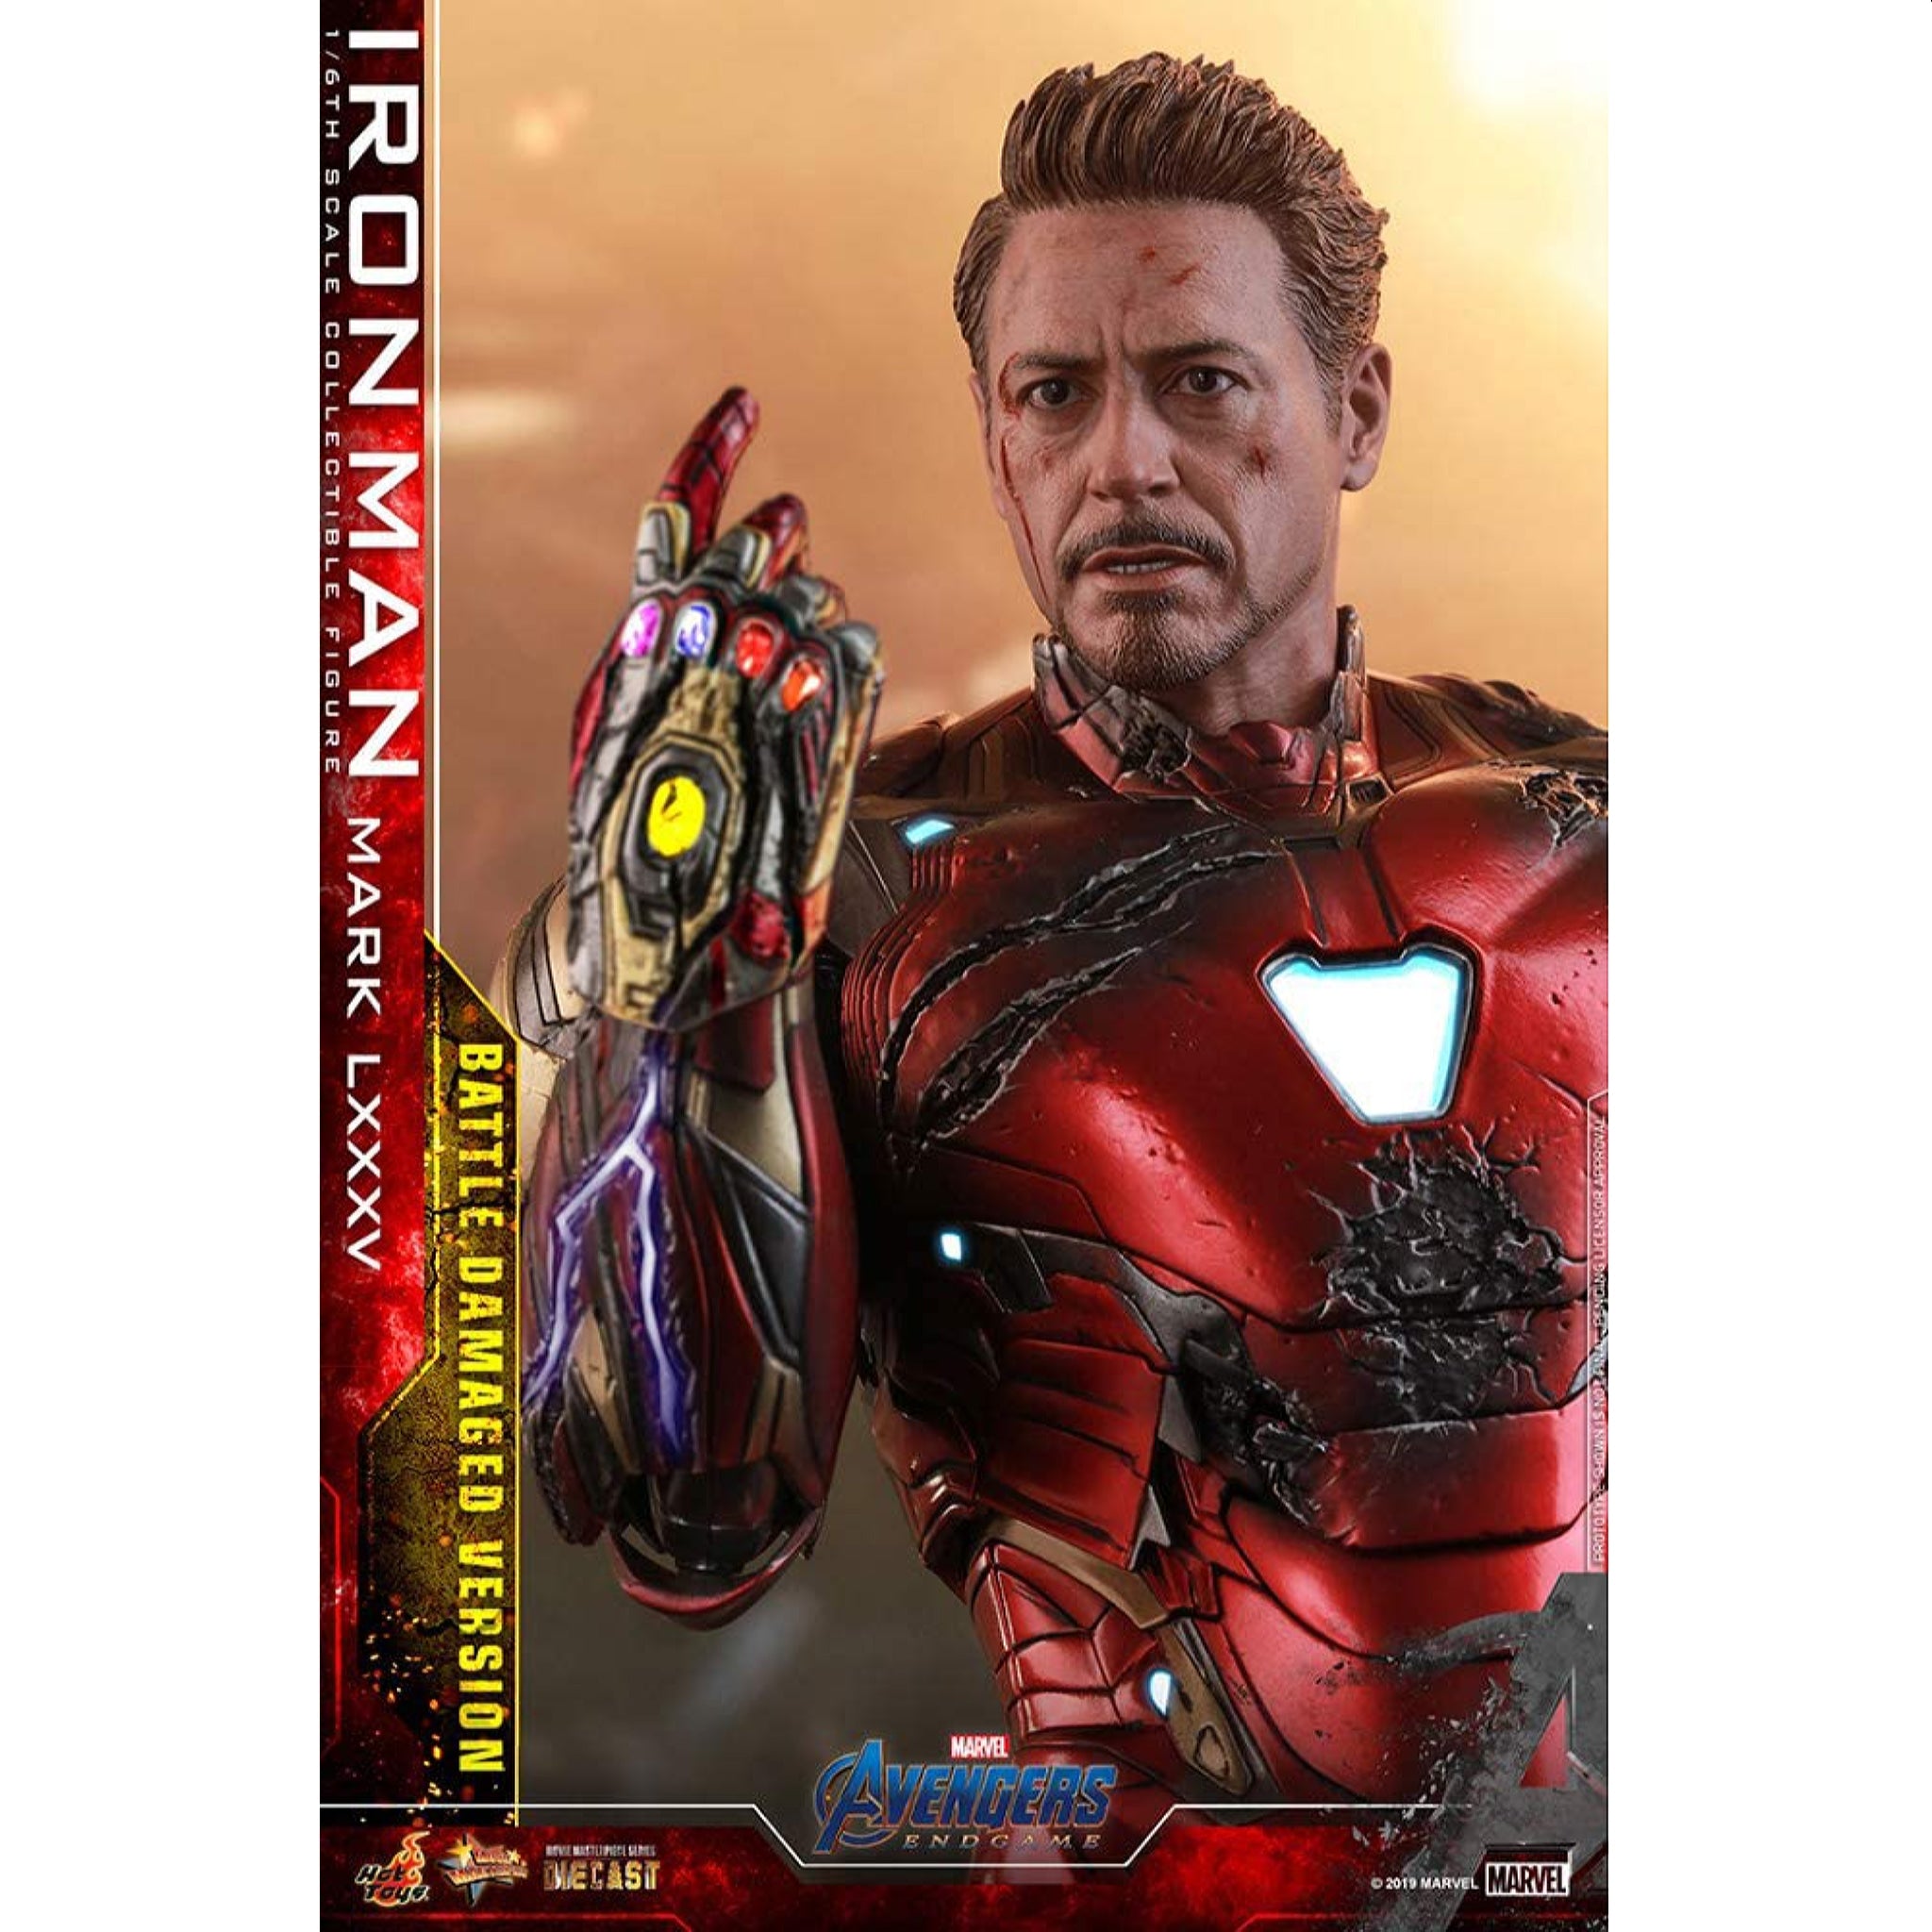 Hot Toys Avengers Endgame Movie Masterpiece Iron Man Mark LXXXV Battle Damaged Version Action Figure